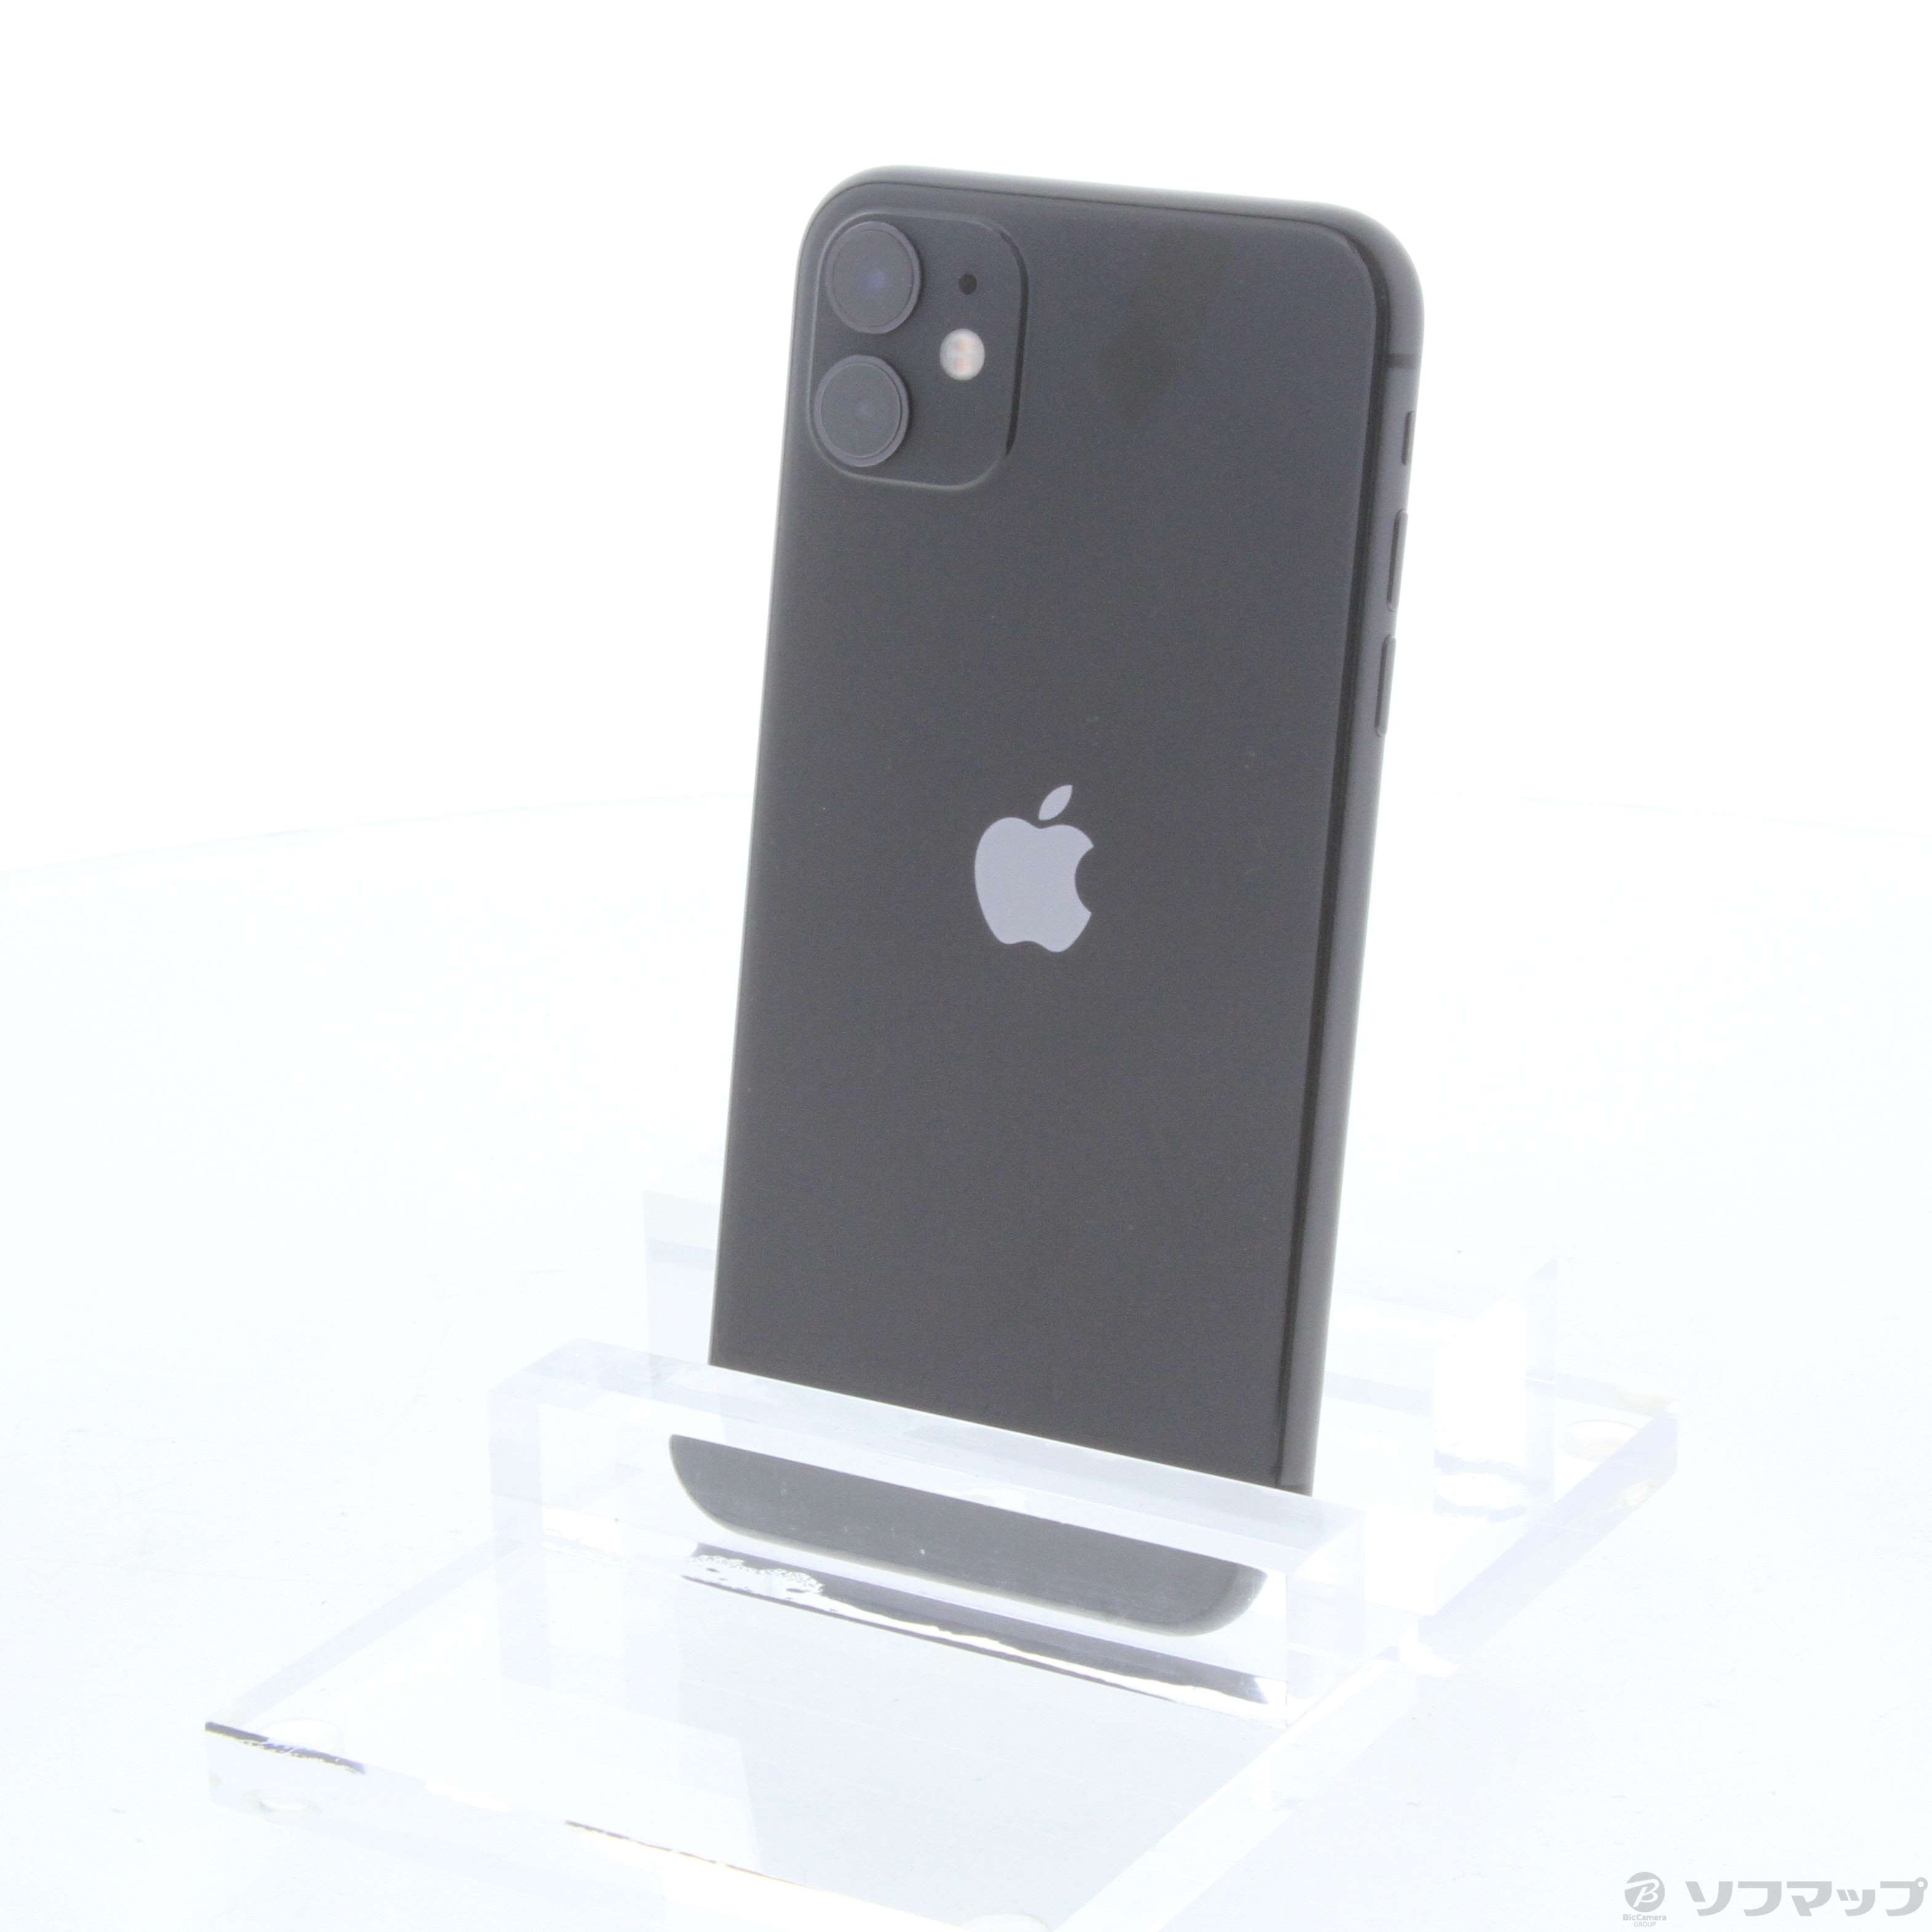 iPhone11 128GB ブラック Apple MWM02J/A - スマートフォン本体